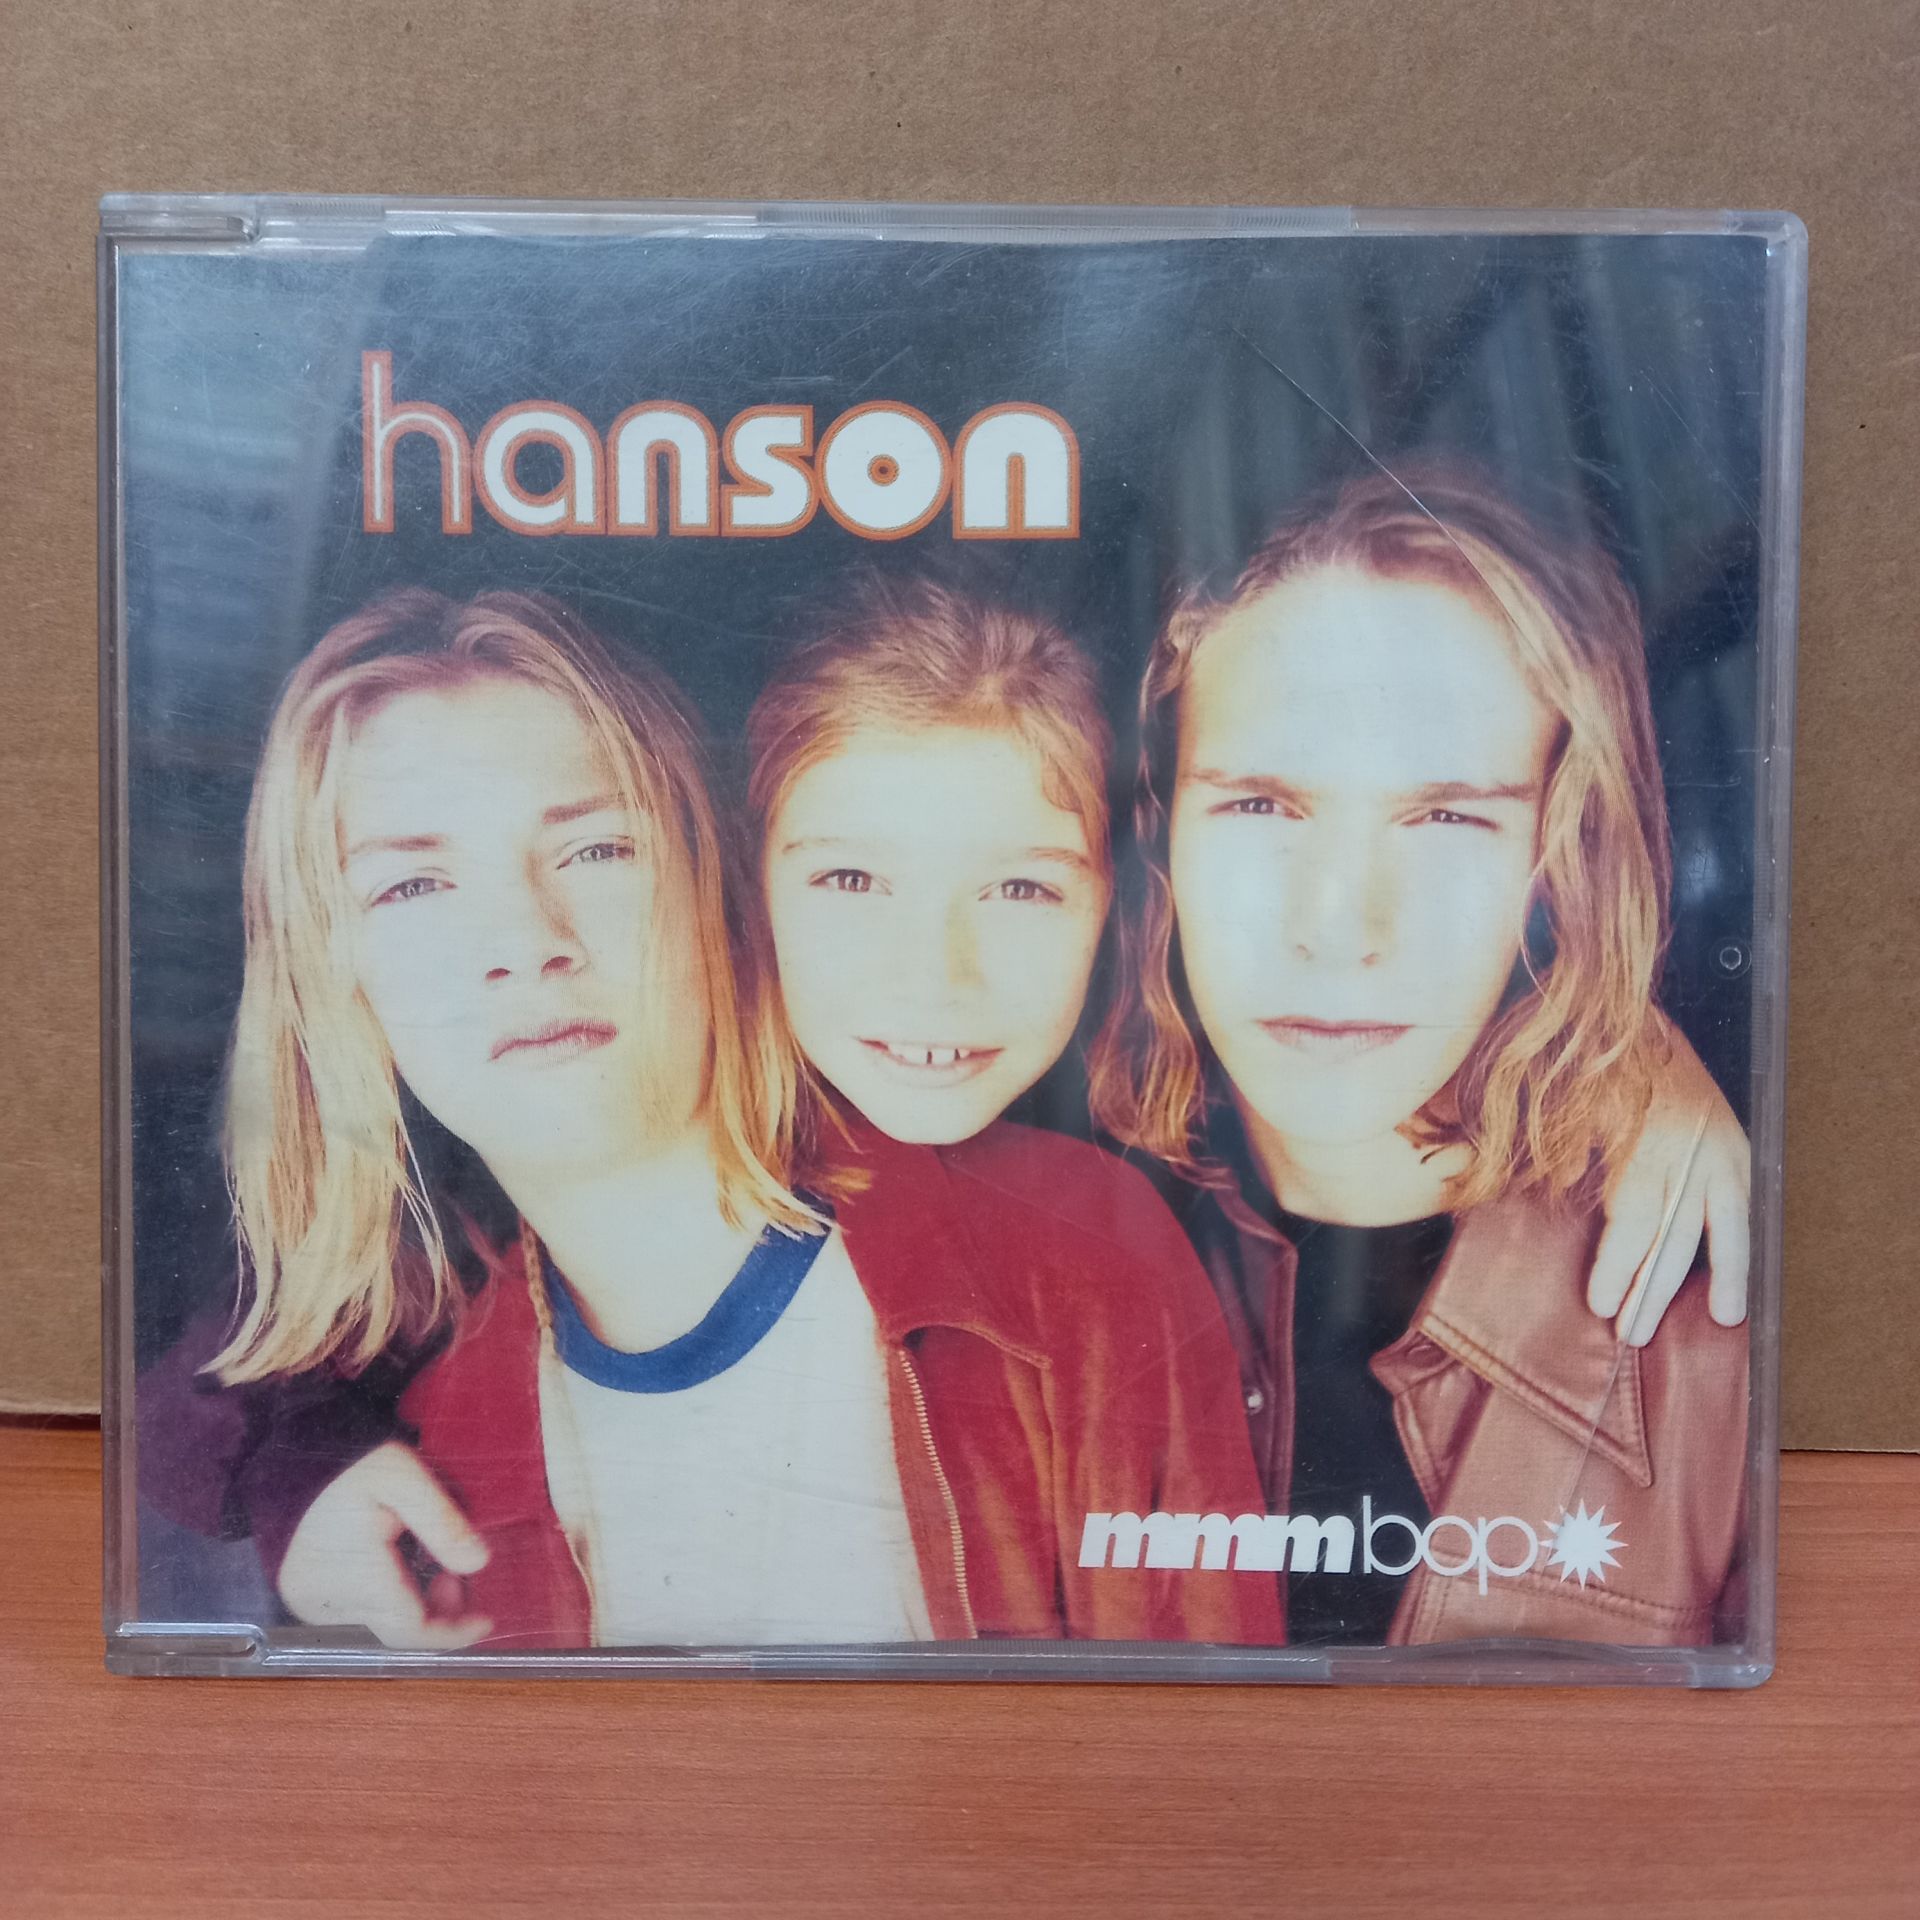 HANSON - MMMBOP (1997) - CD SINGLE 2. EL